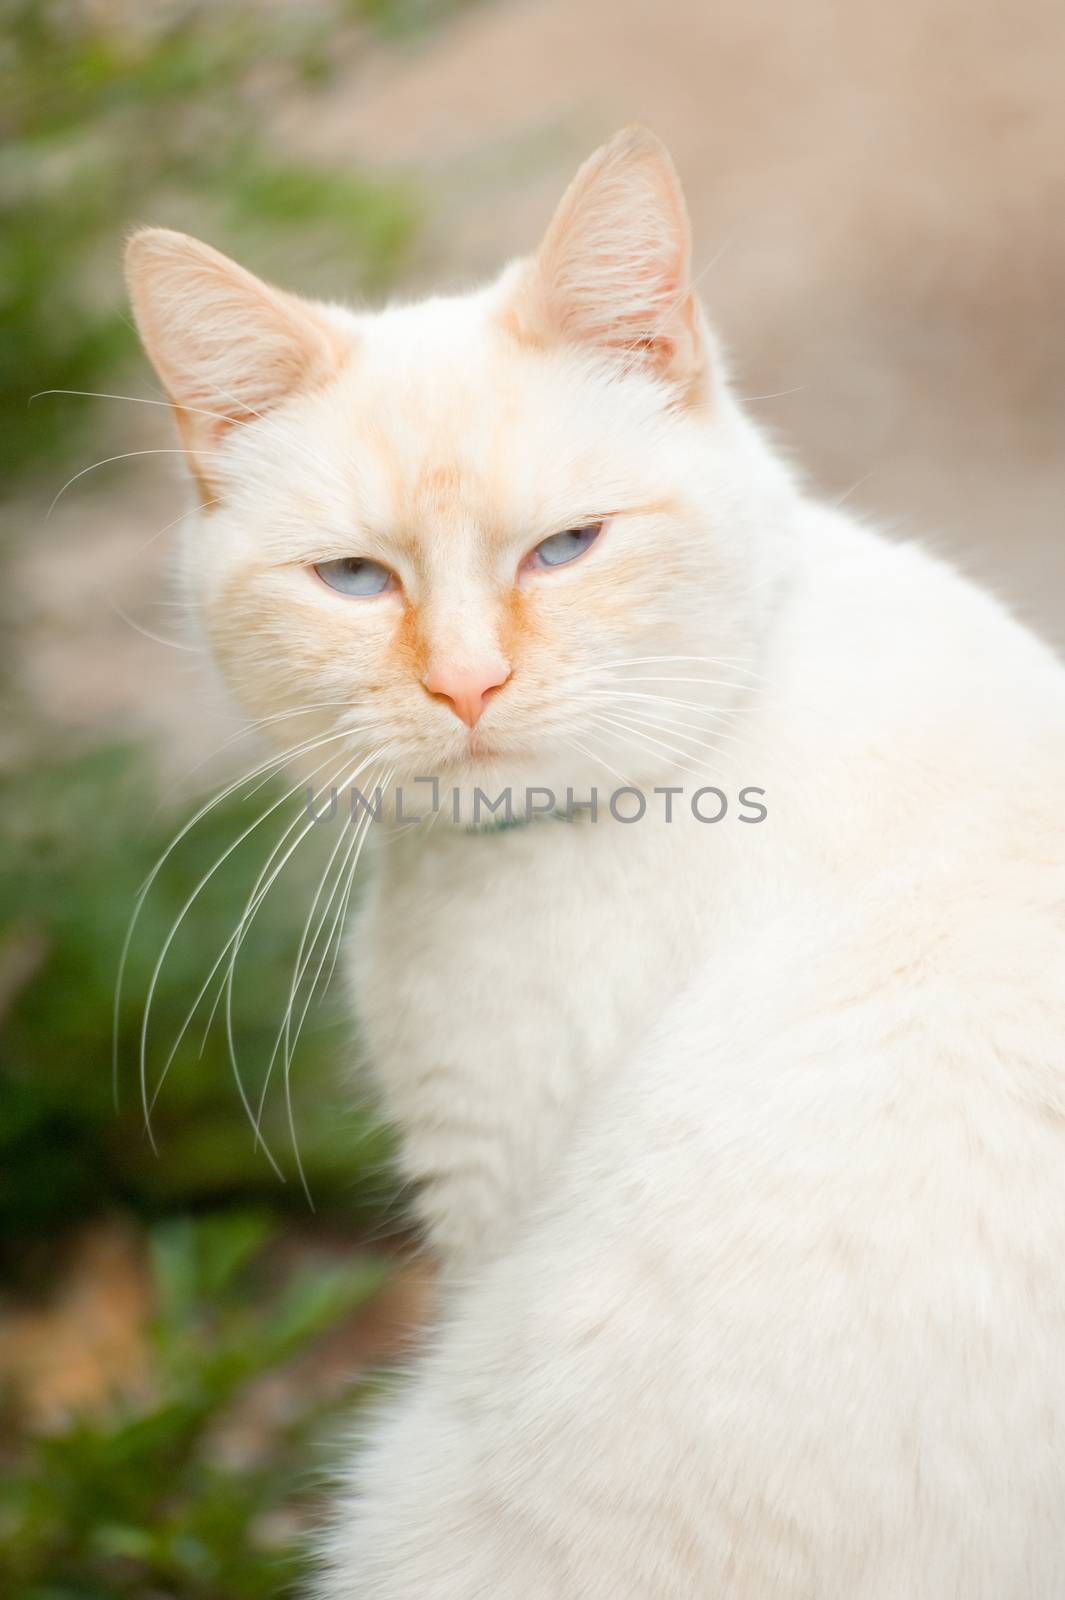 beautiful birman cat with mysterious blue eyes